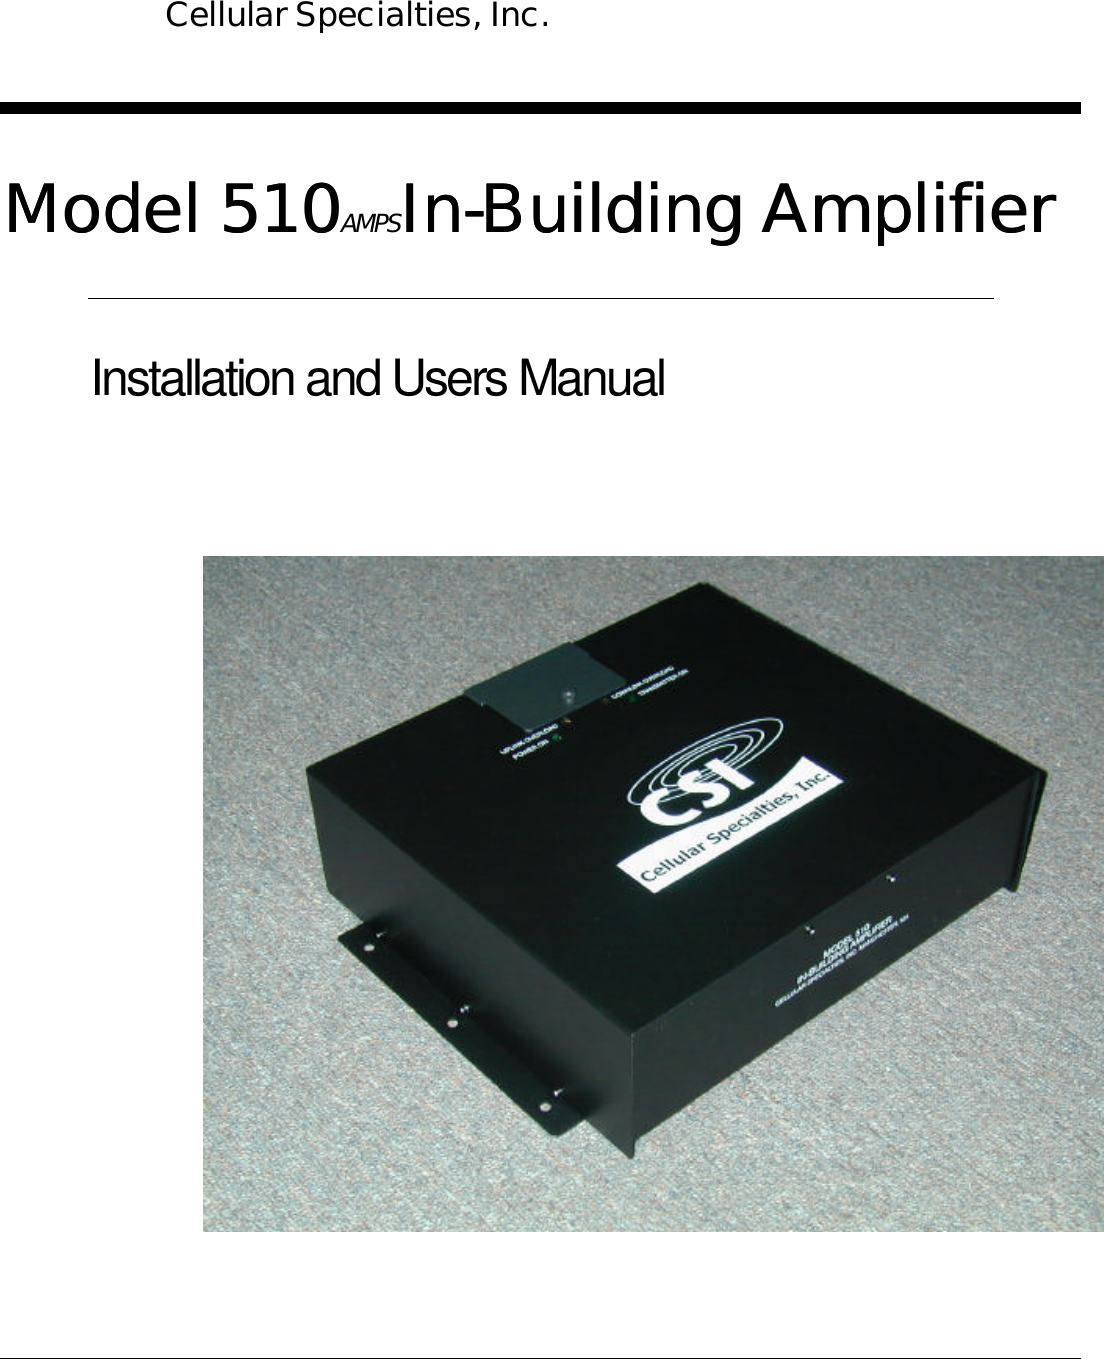     Model 510Model 510AMPSInIn--Building AmplifierBuilding Amplifier  Installation and Users Manual       Cellular Specialties, Inc.  